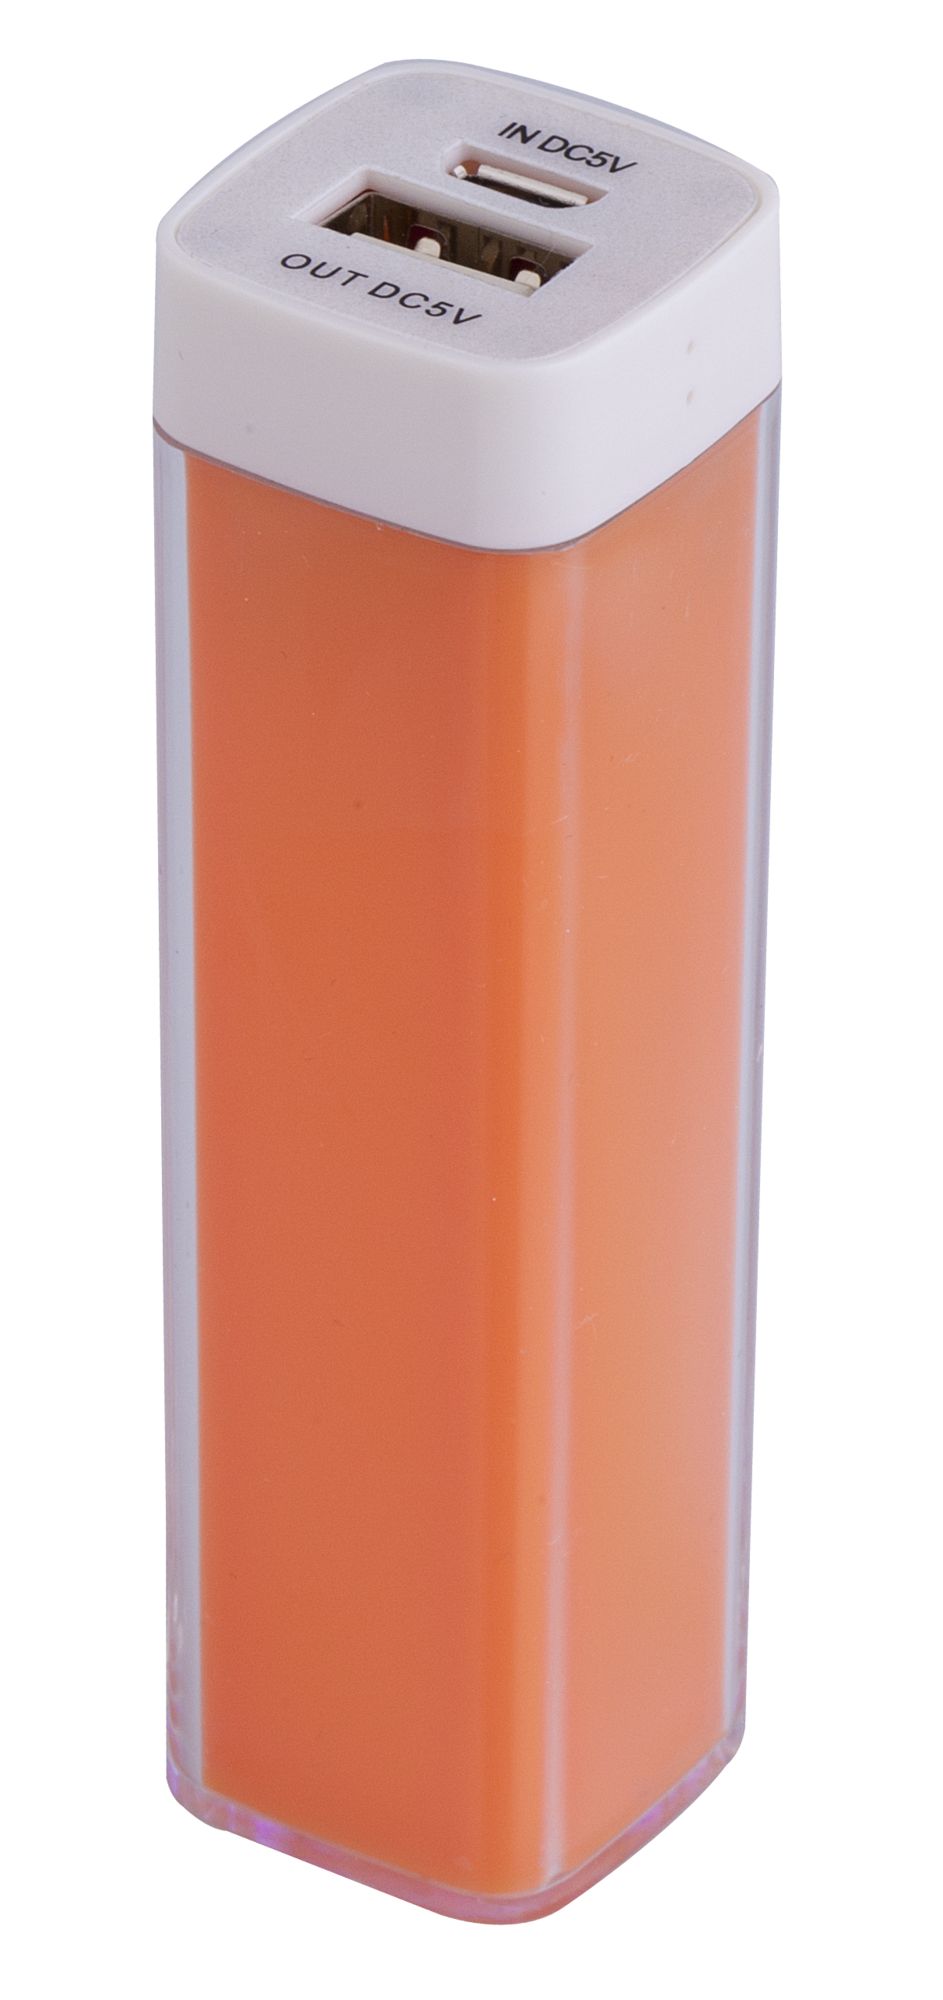 Внешний аккумулятор Bar, 2200 мАч, оранжевый